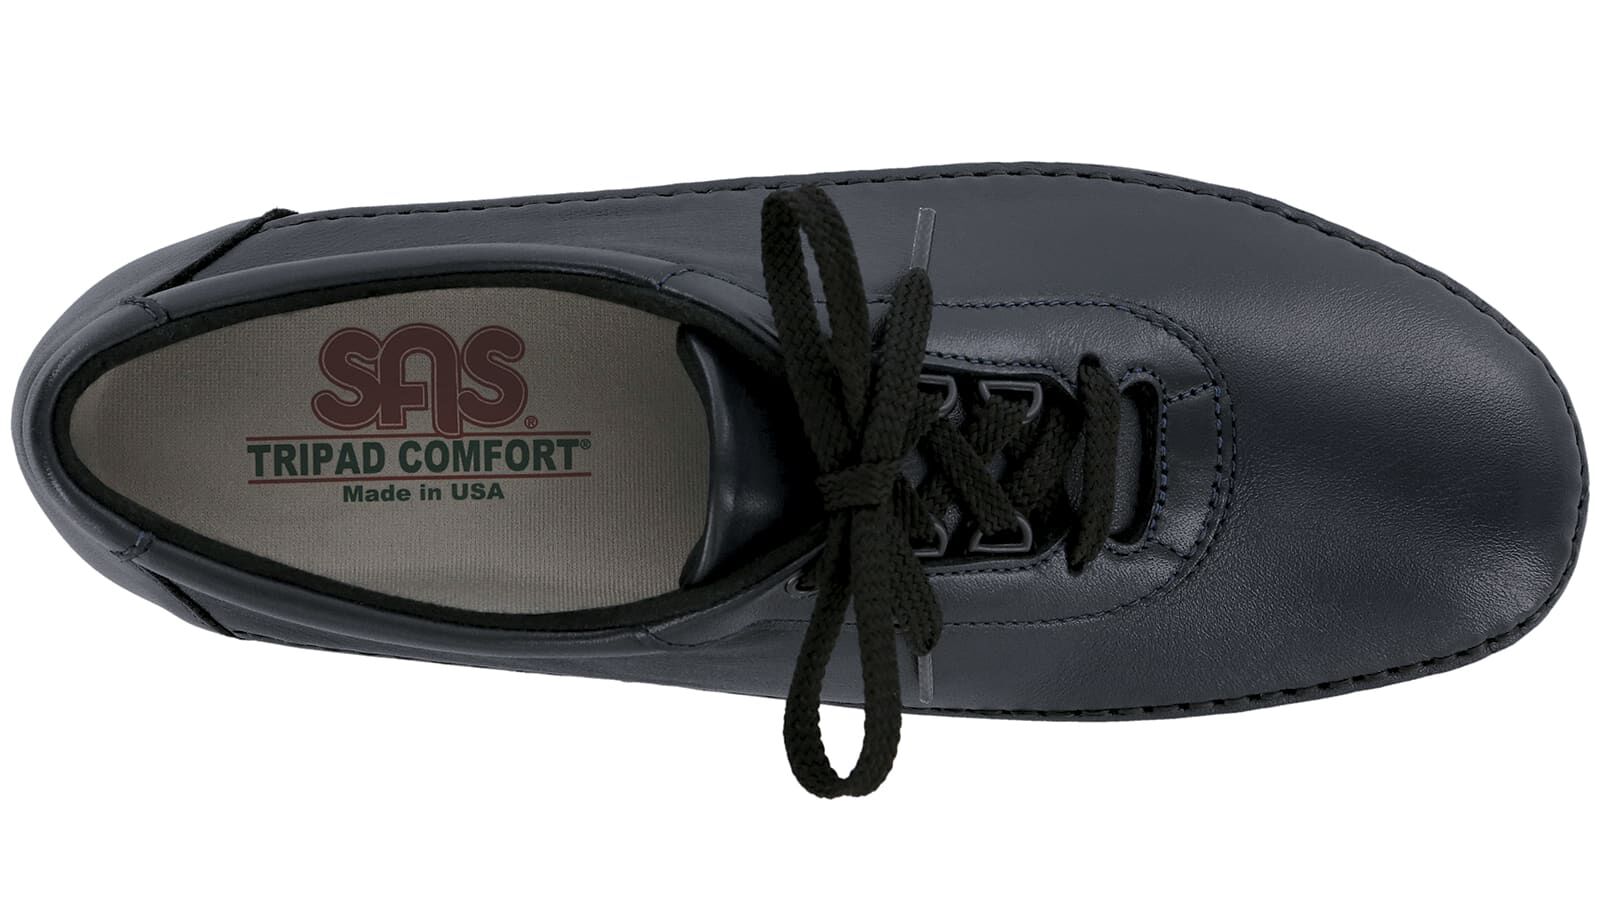 sas shoes women's comfort walking